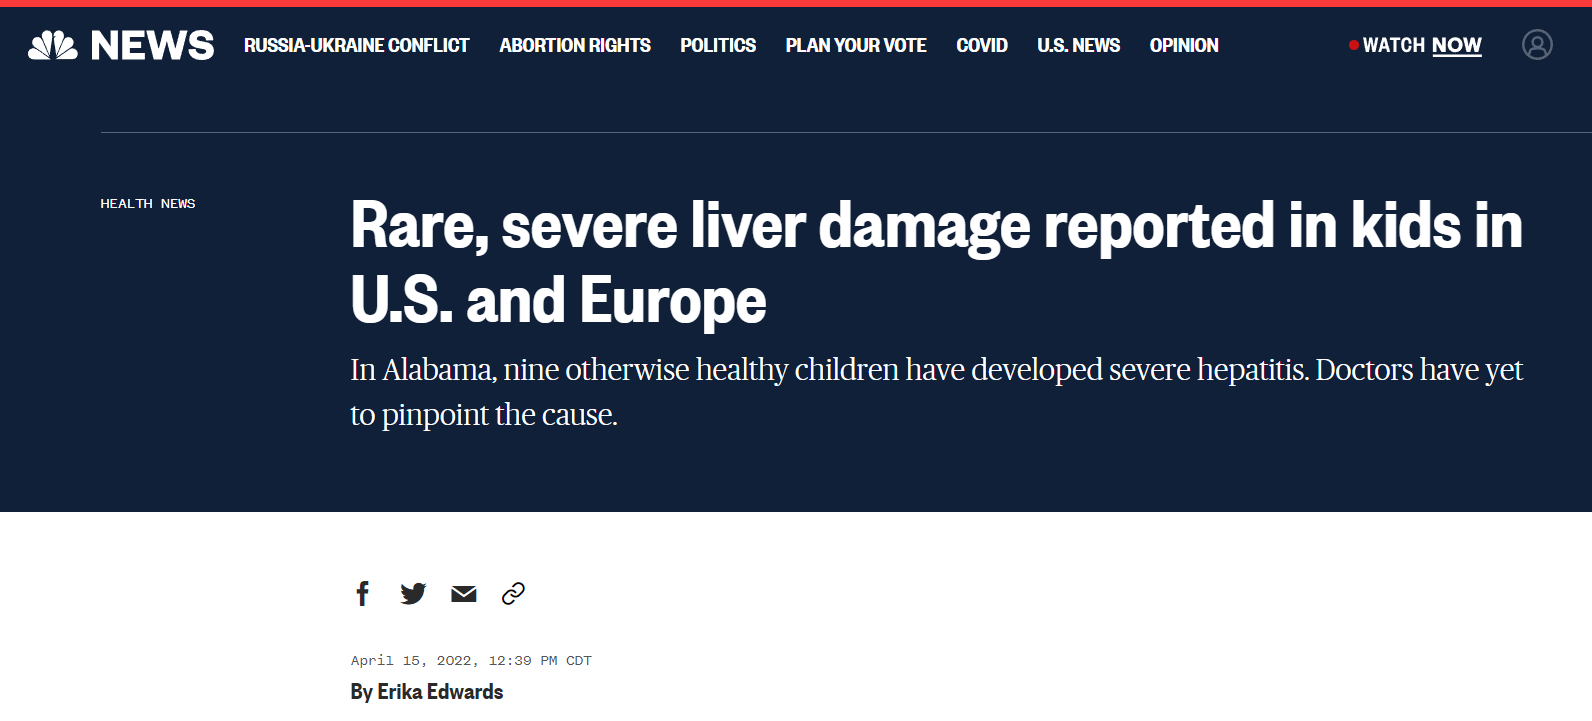 https://www.nbcnews.com/health/health-news/severe-hepatitis-kids-dozens-cases-reported-us-europe-rcna24553